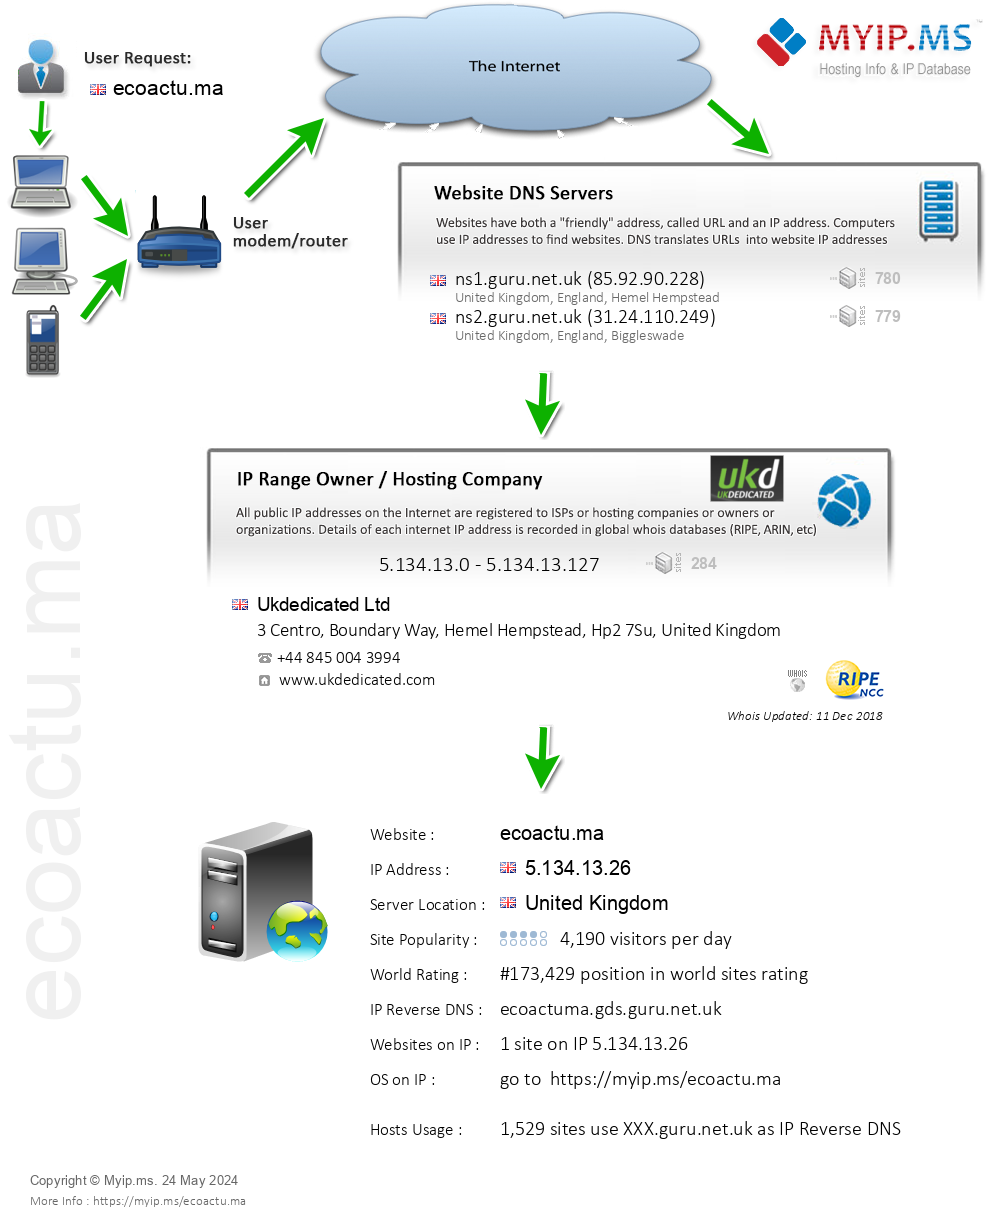 Ecoactu.ma - Website Hosting Visual IP Diagram